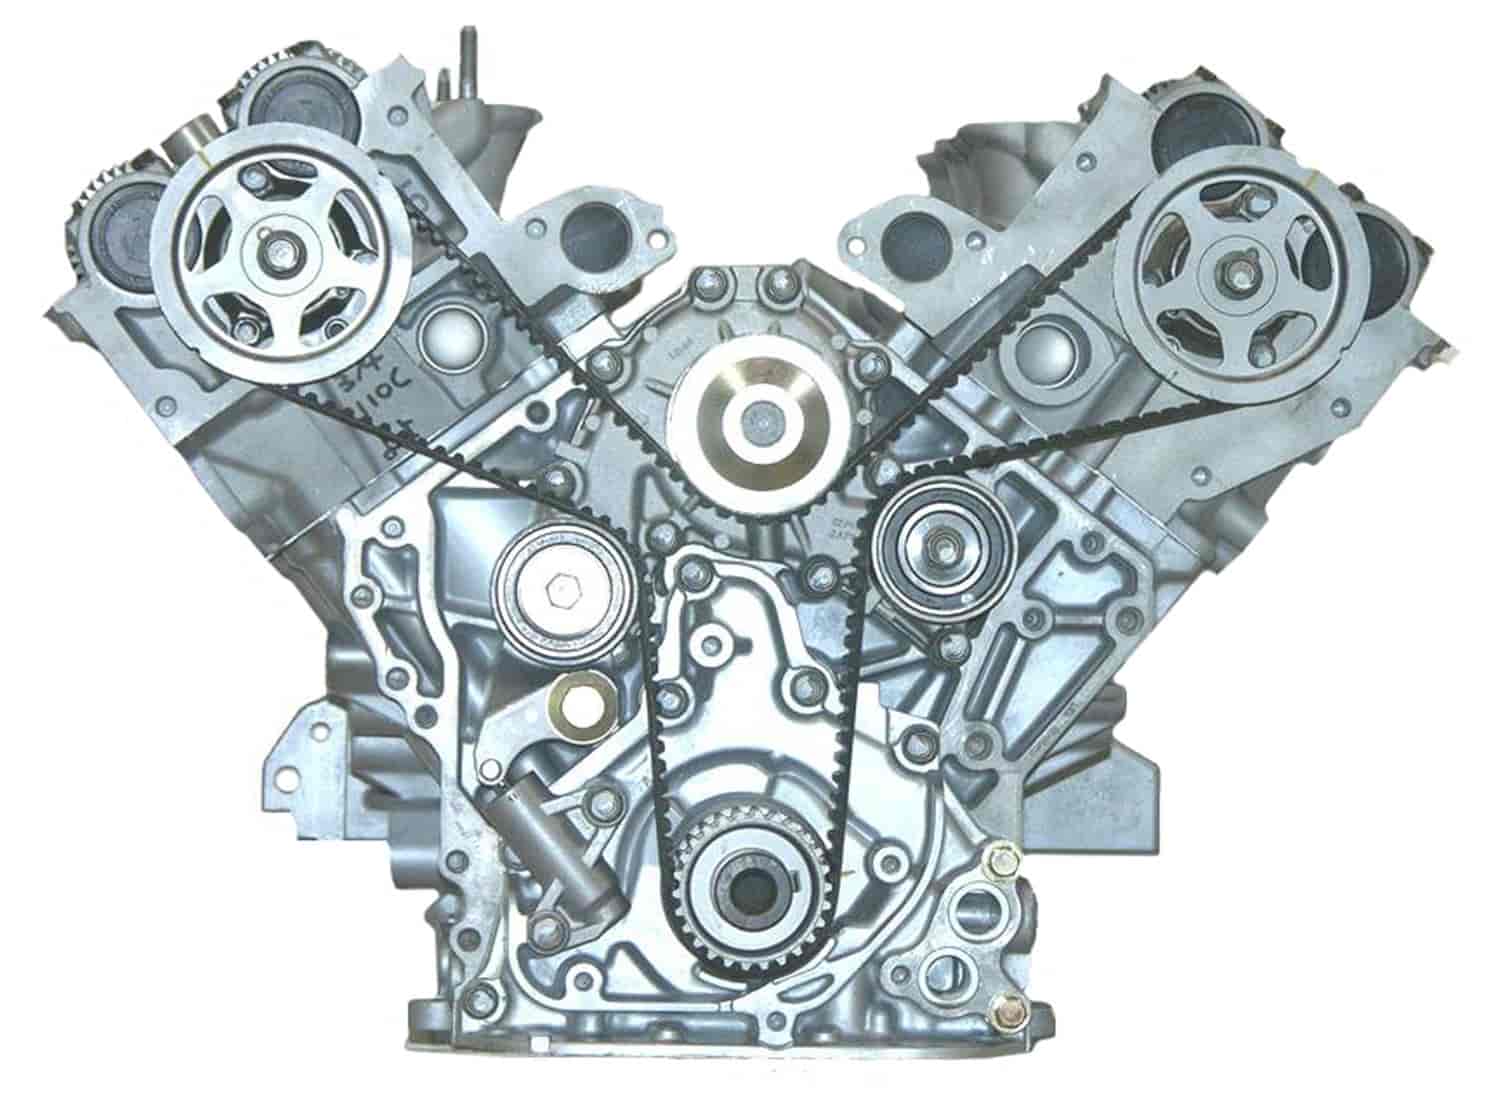 Remanufactured Crate Engine for 1997-2004 Isuzu & Honda with 3.2L V6